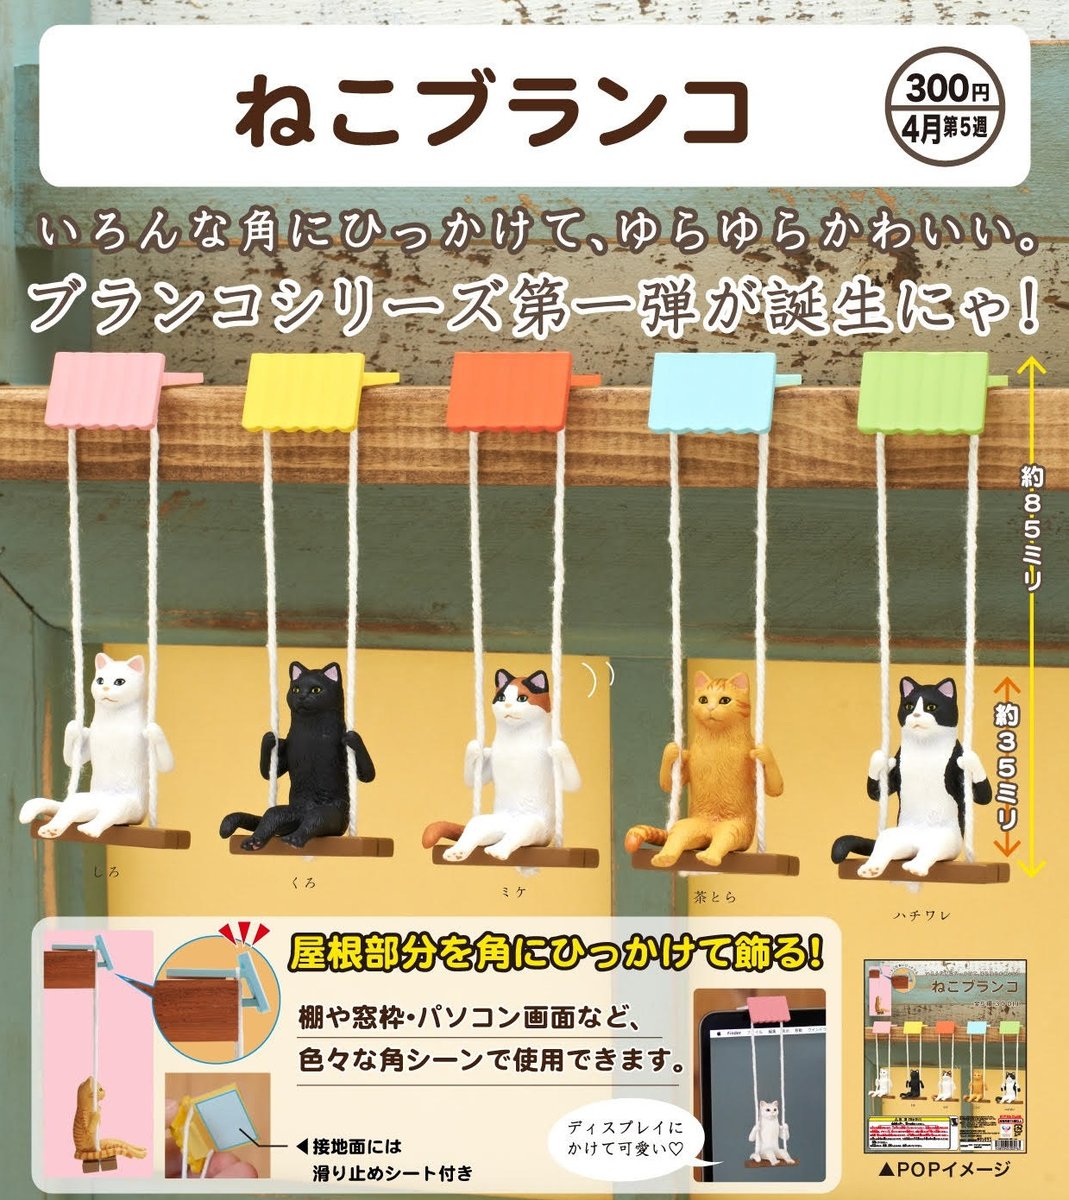 Kitan Club Neko Buranko cat Swing Capsule Gashapon Toy Complete Figures set of 5